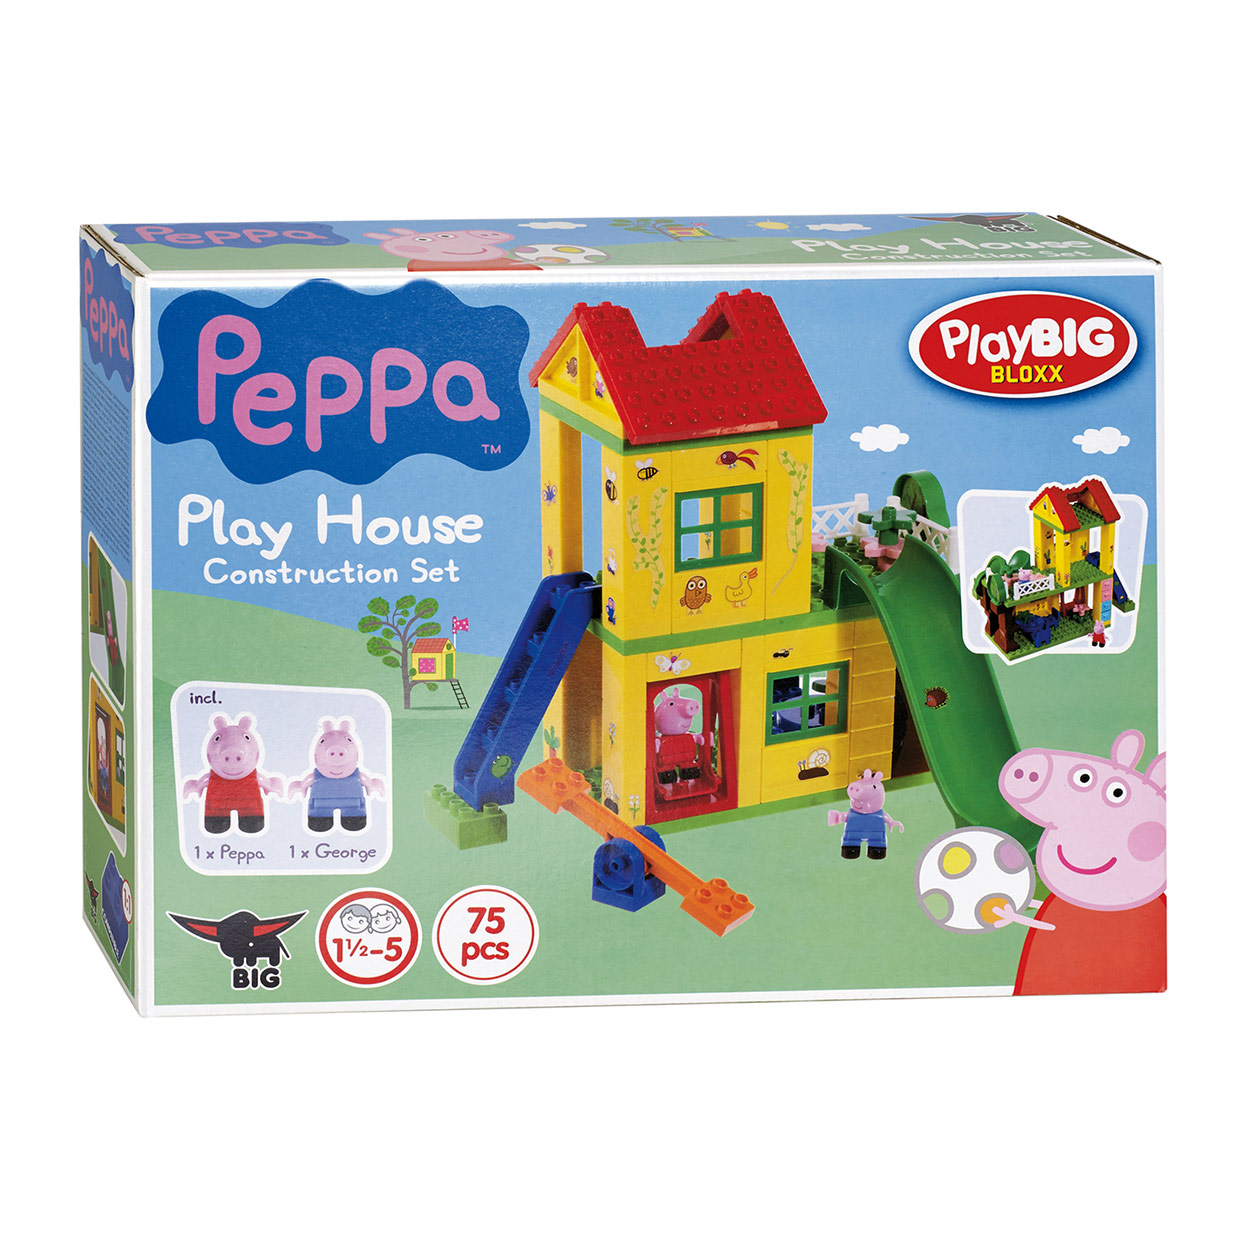 for children 18 months Construction Set PlayBIG "Play House" Peppa Pig 75 pcs 